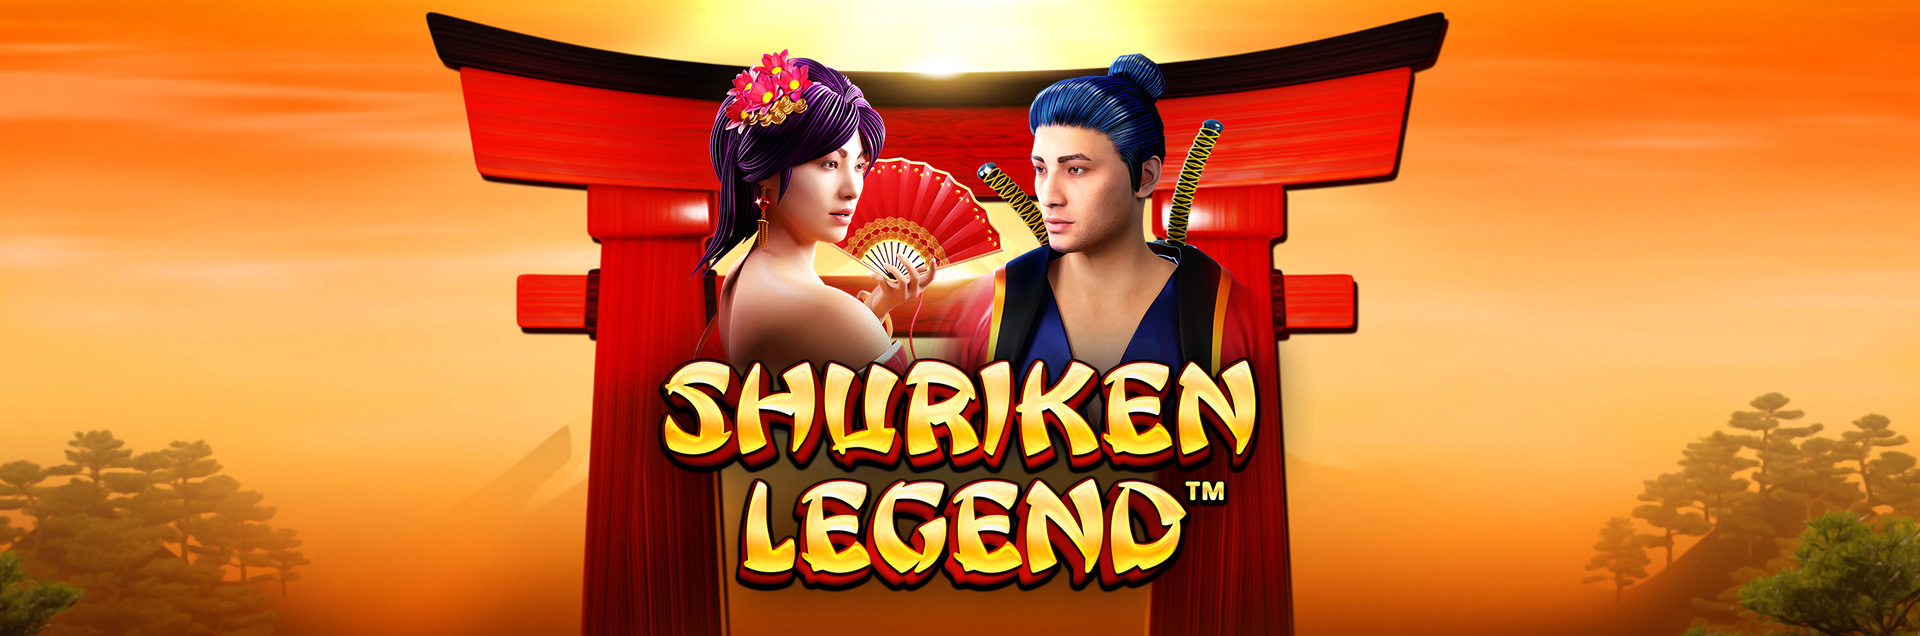 Shuriken Legend header games